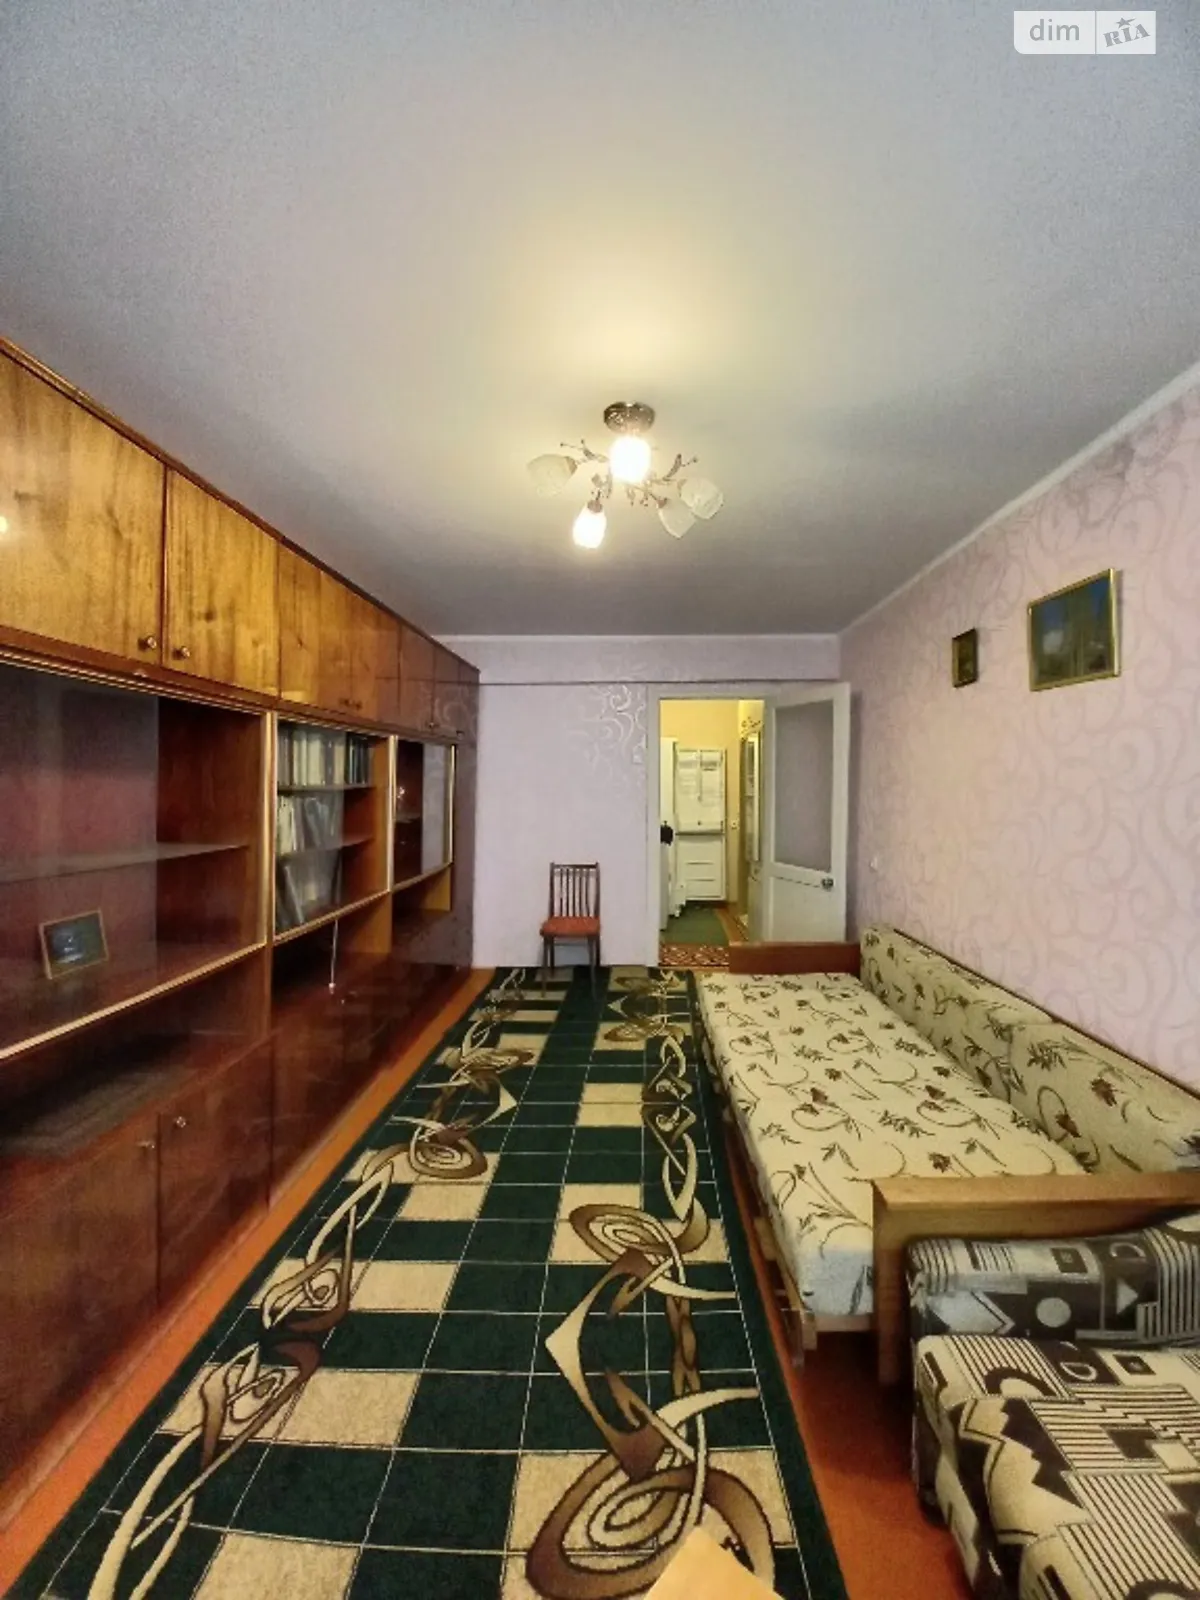 Сдается в аренду 2-комнатная квартира 52 кв. м в Николаеве - фото 2